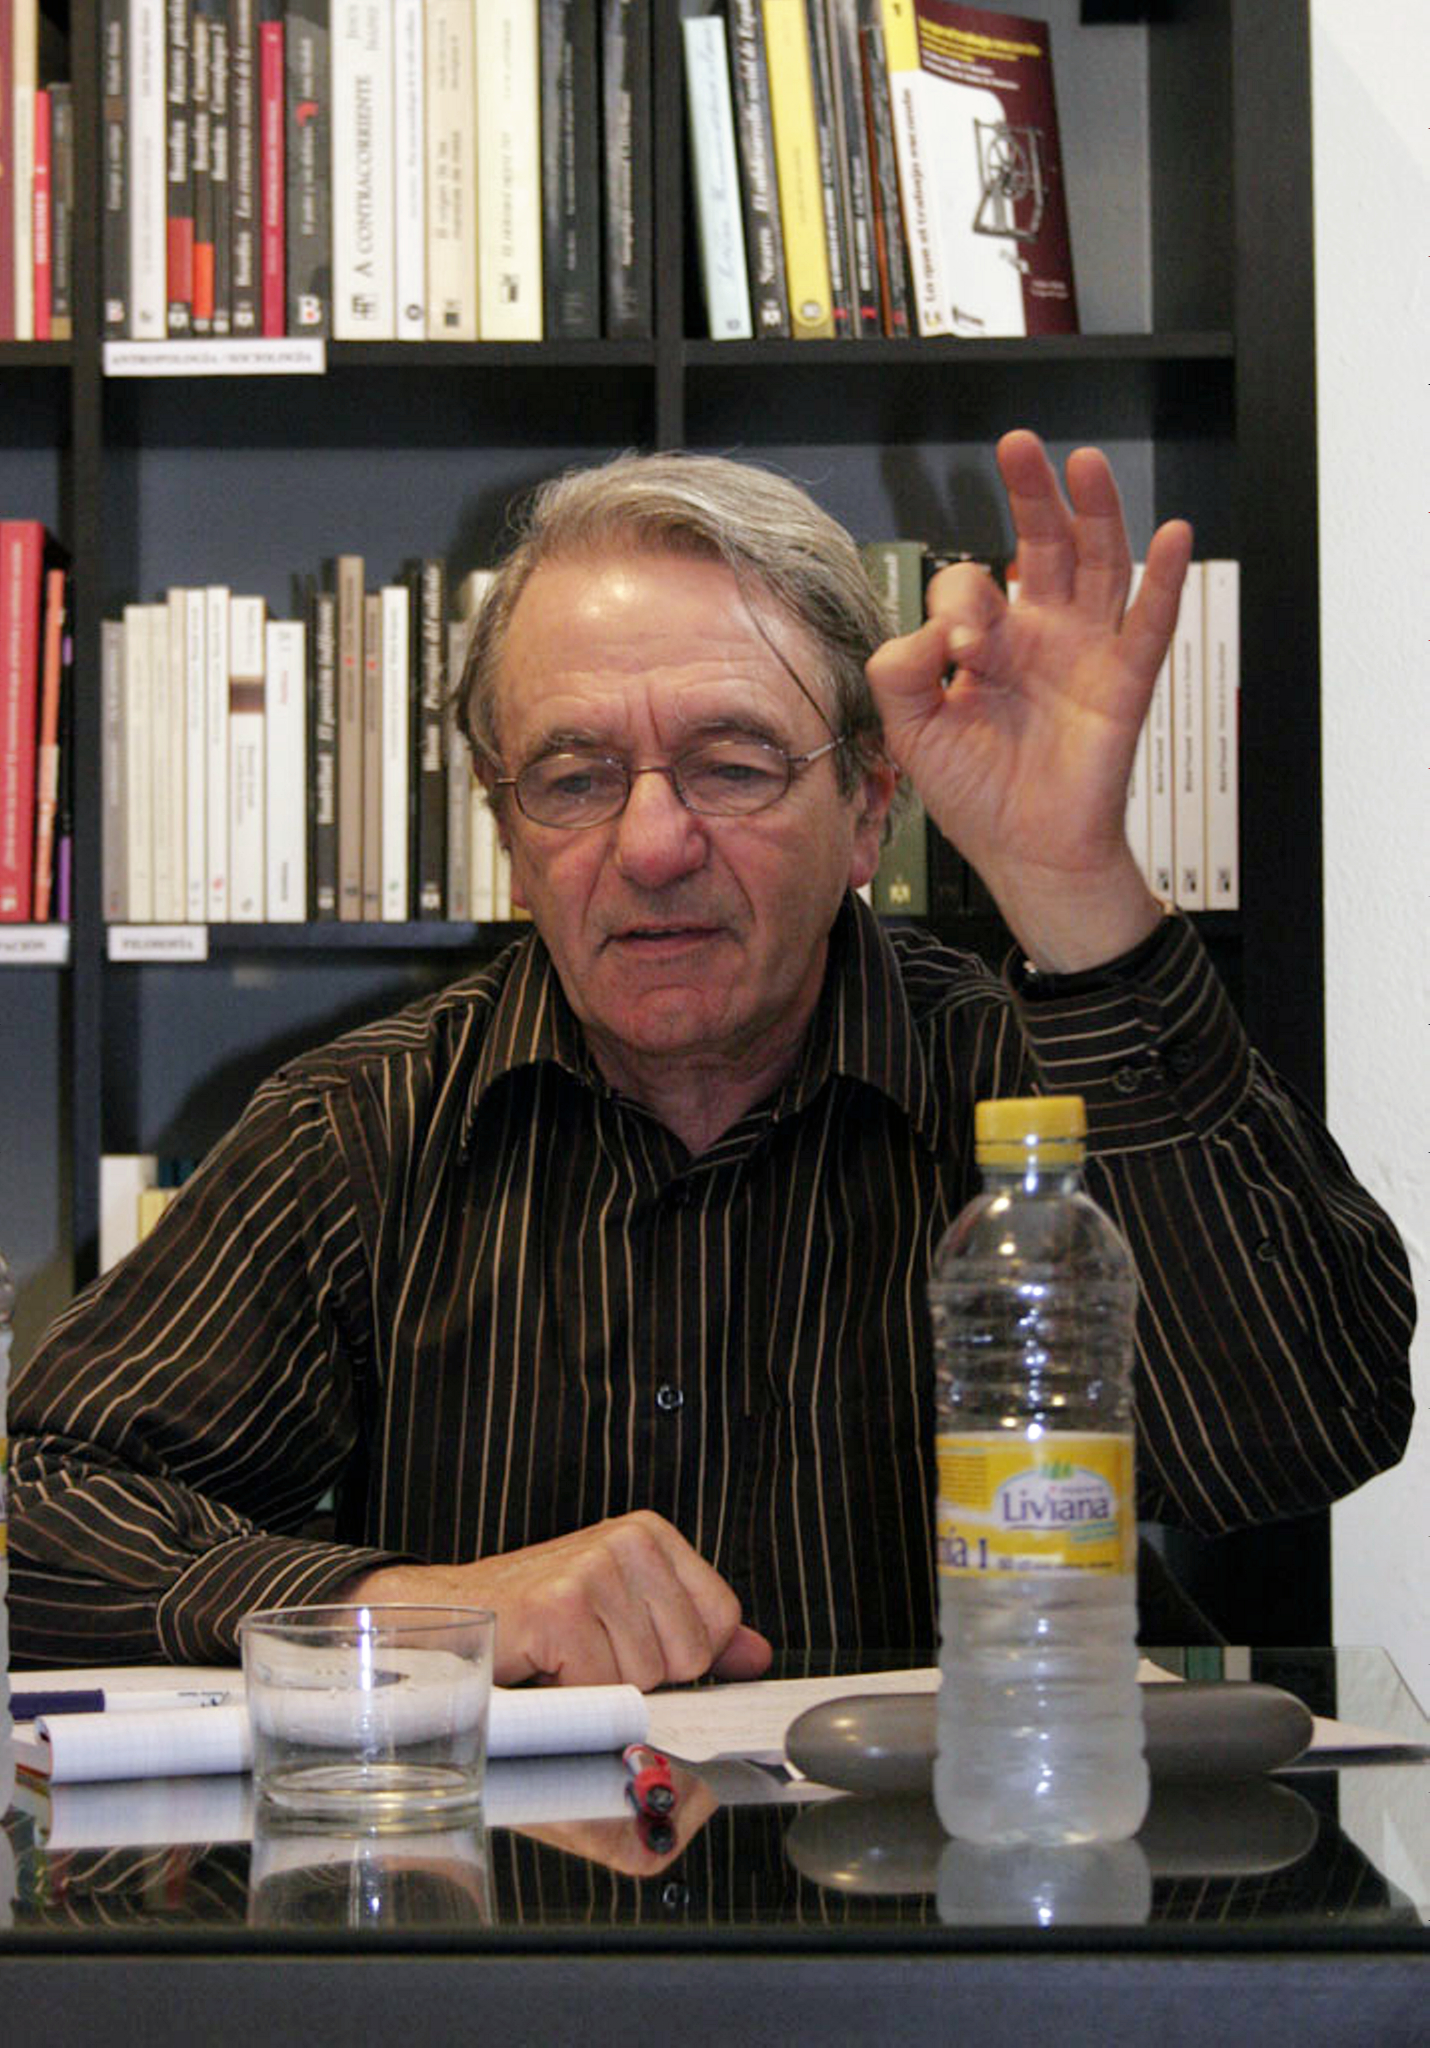 http://upload.wikimedia.org/wikipedia/commons/0/07/Jacques_Ranciere-2.jpg